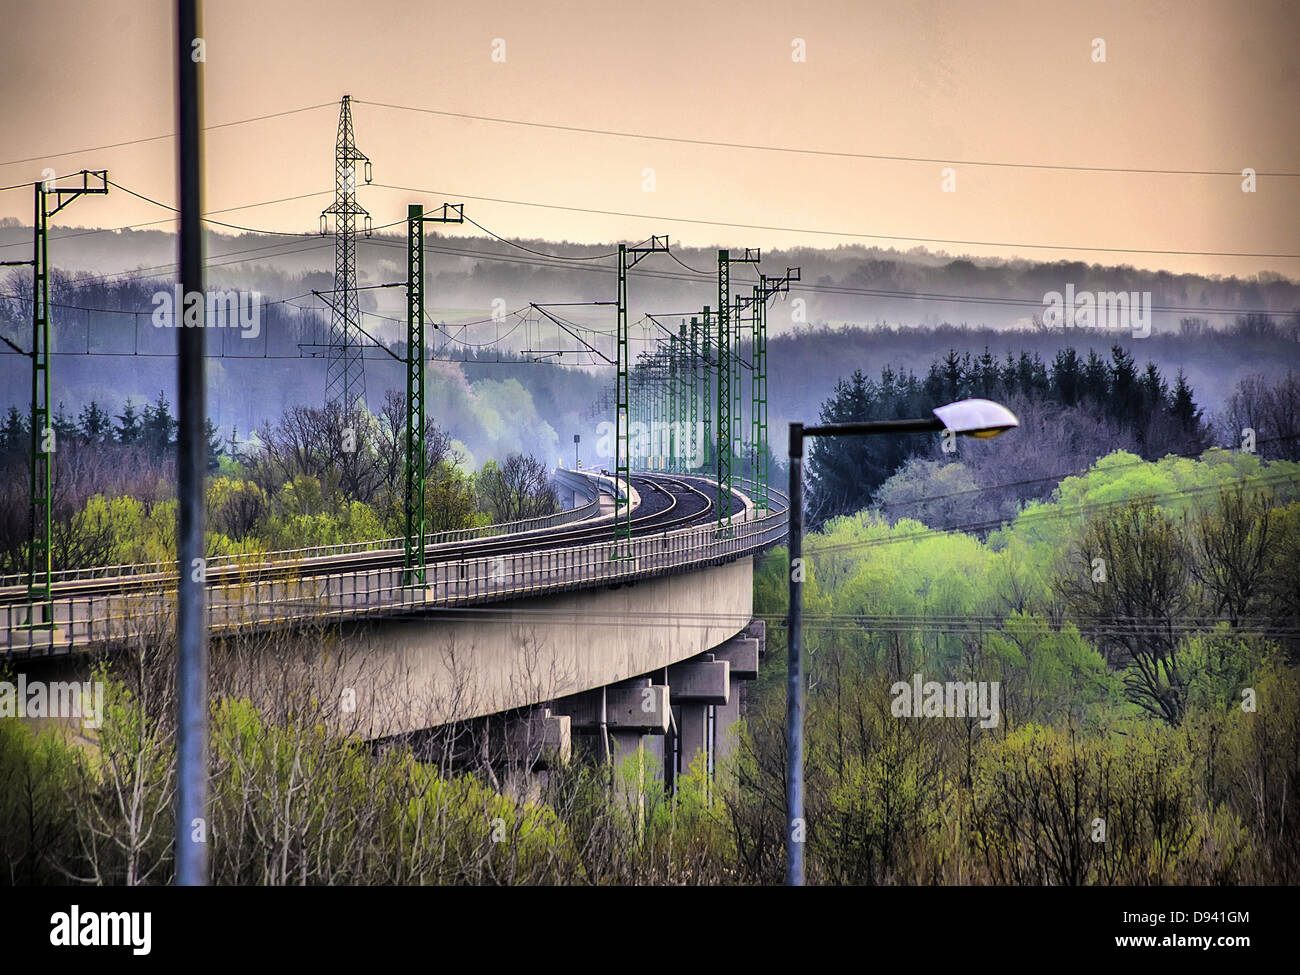 Railway viaduct Stock Photo